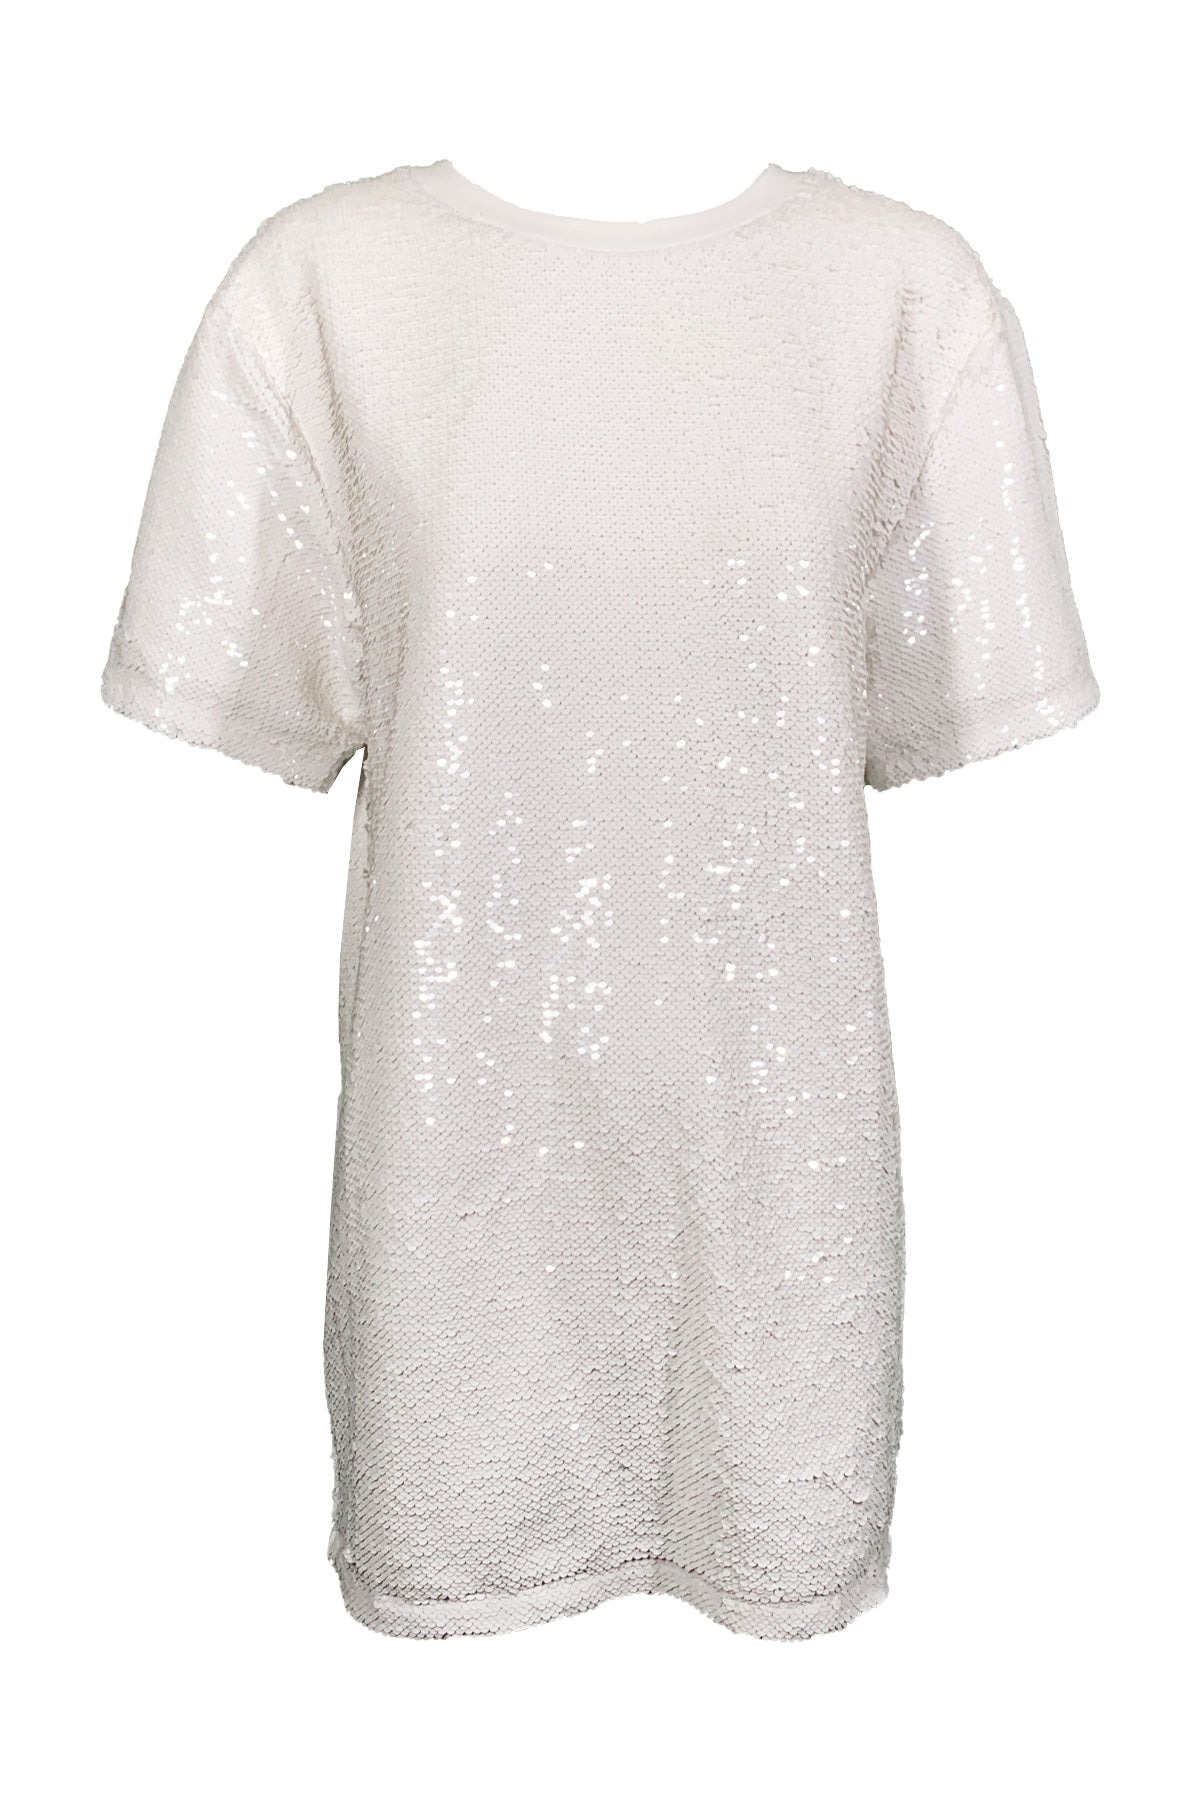 Romy T-Shirt Dress in Comet White - shop-olivia.com